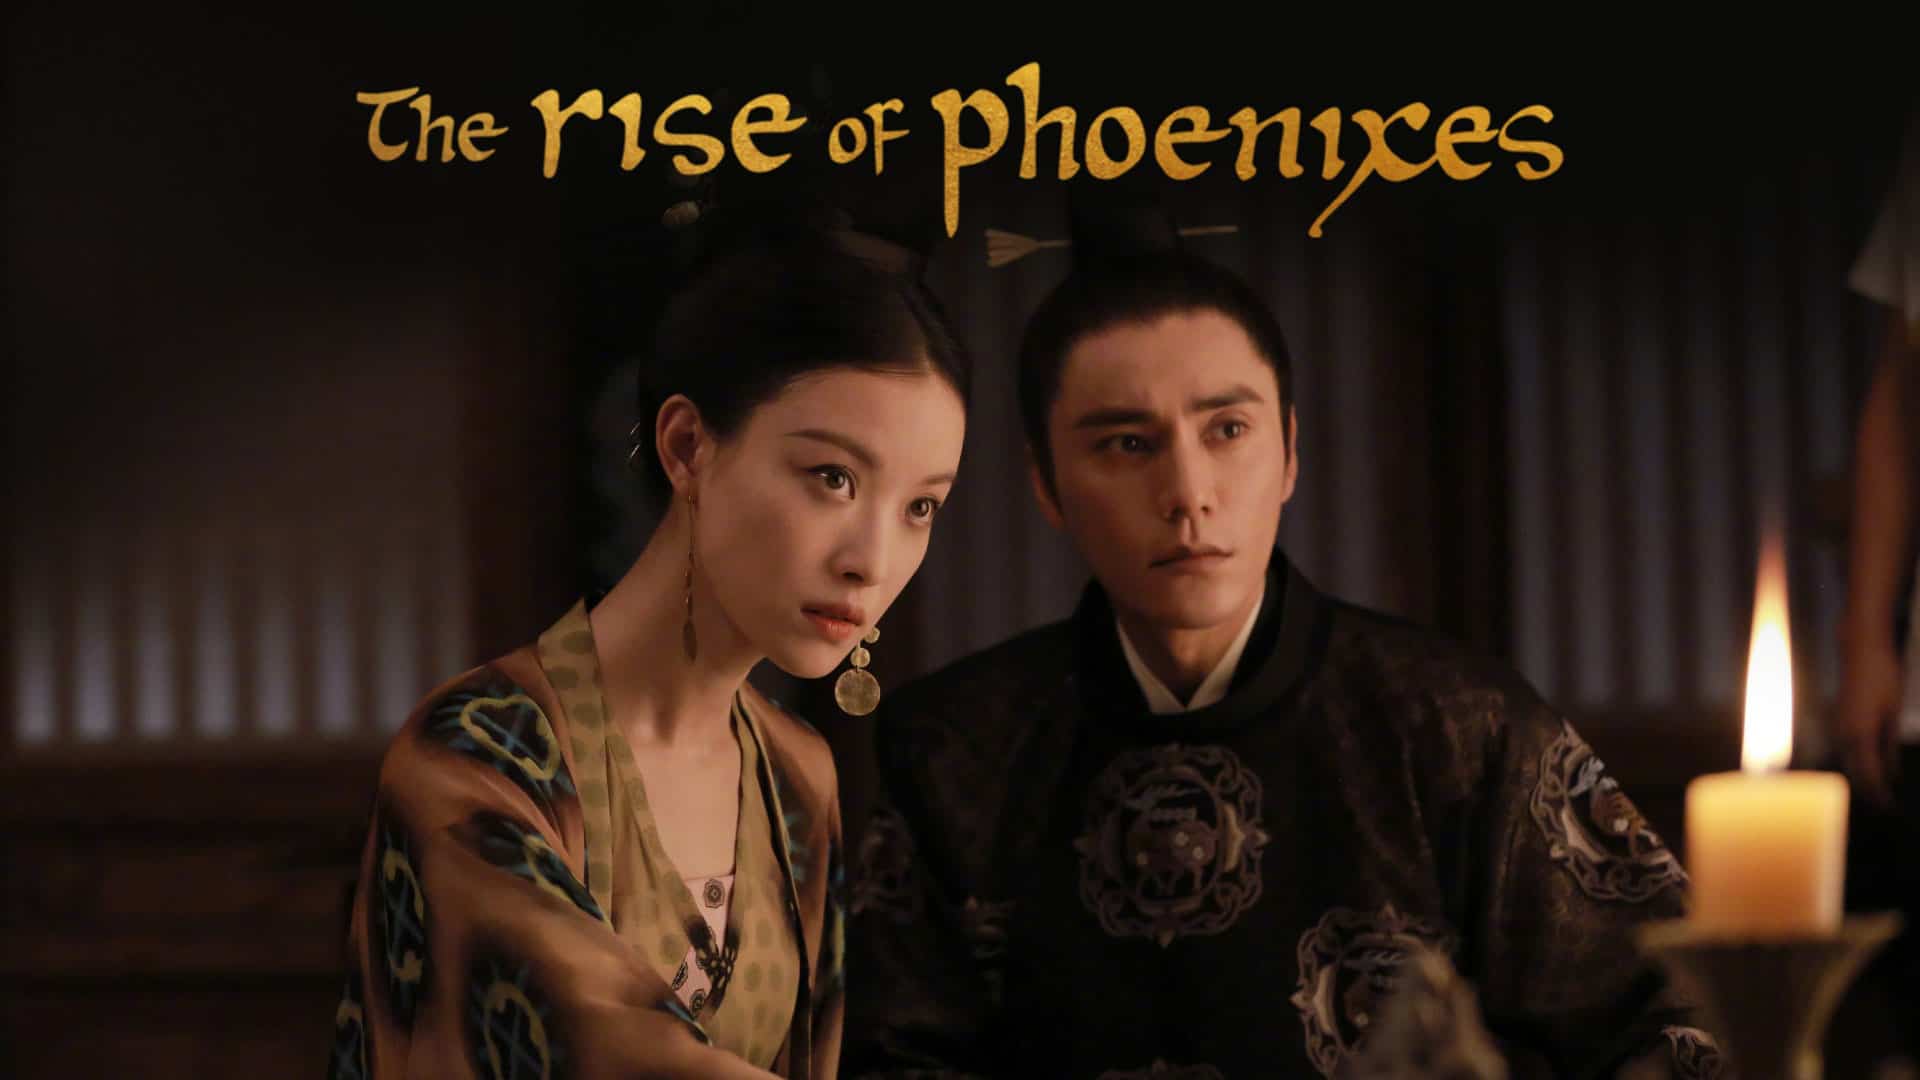 The rise of phoenixes